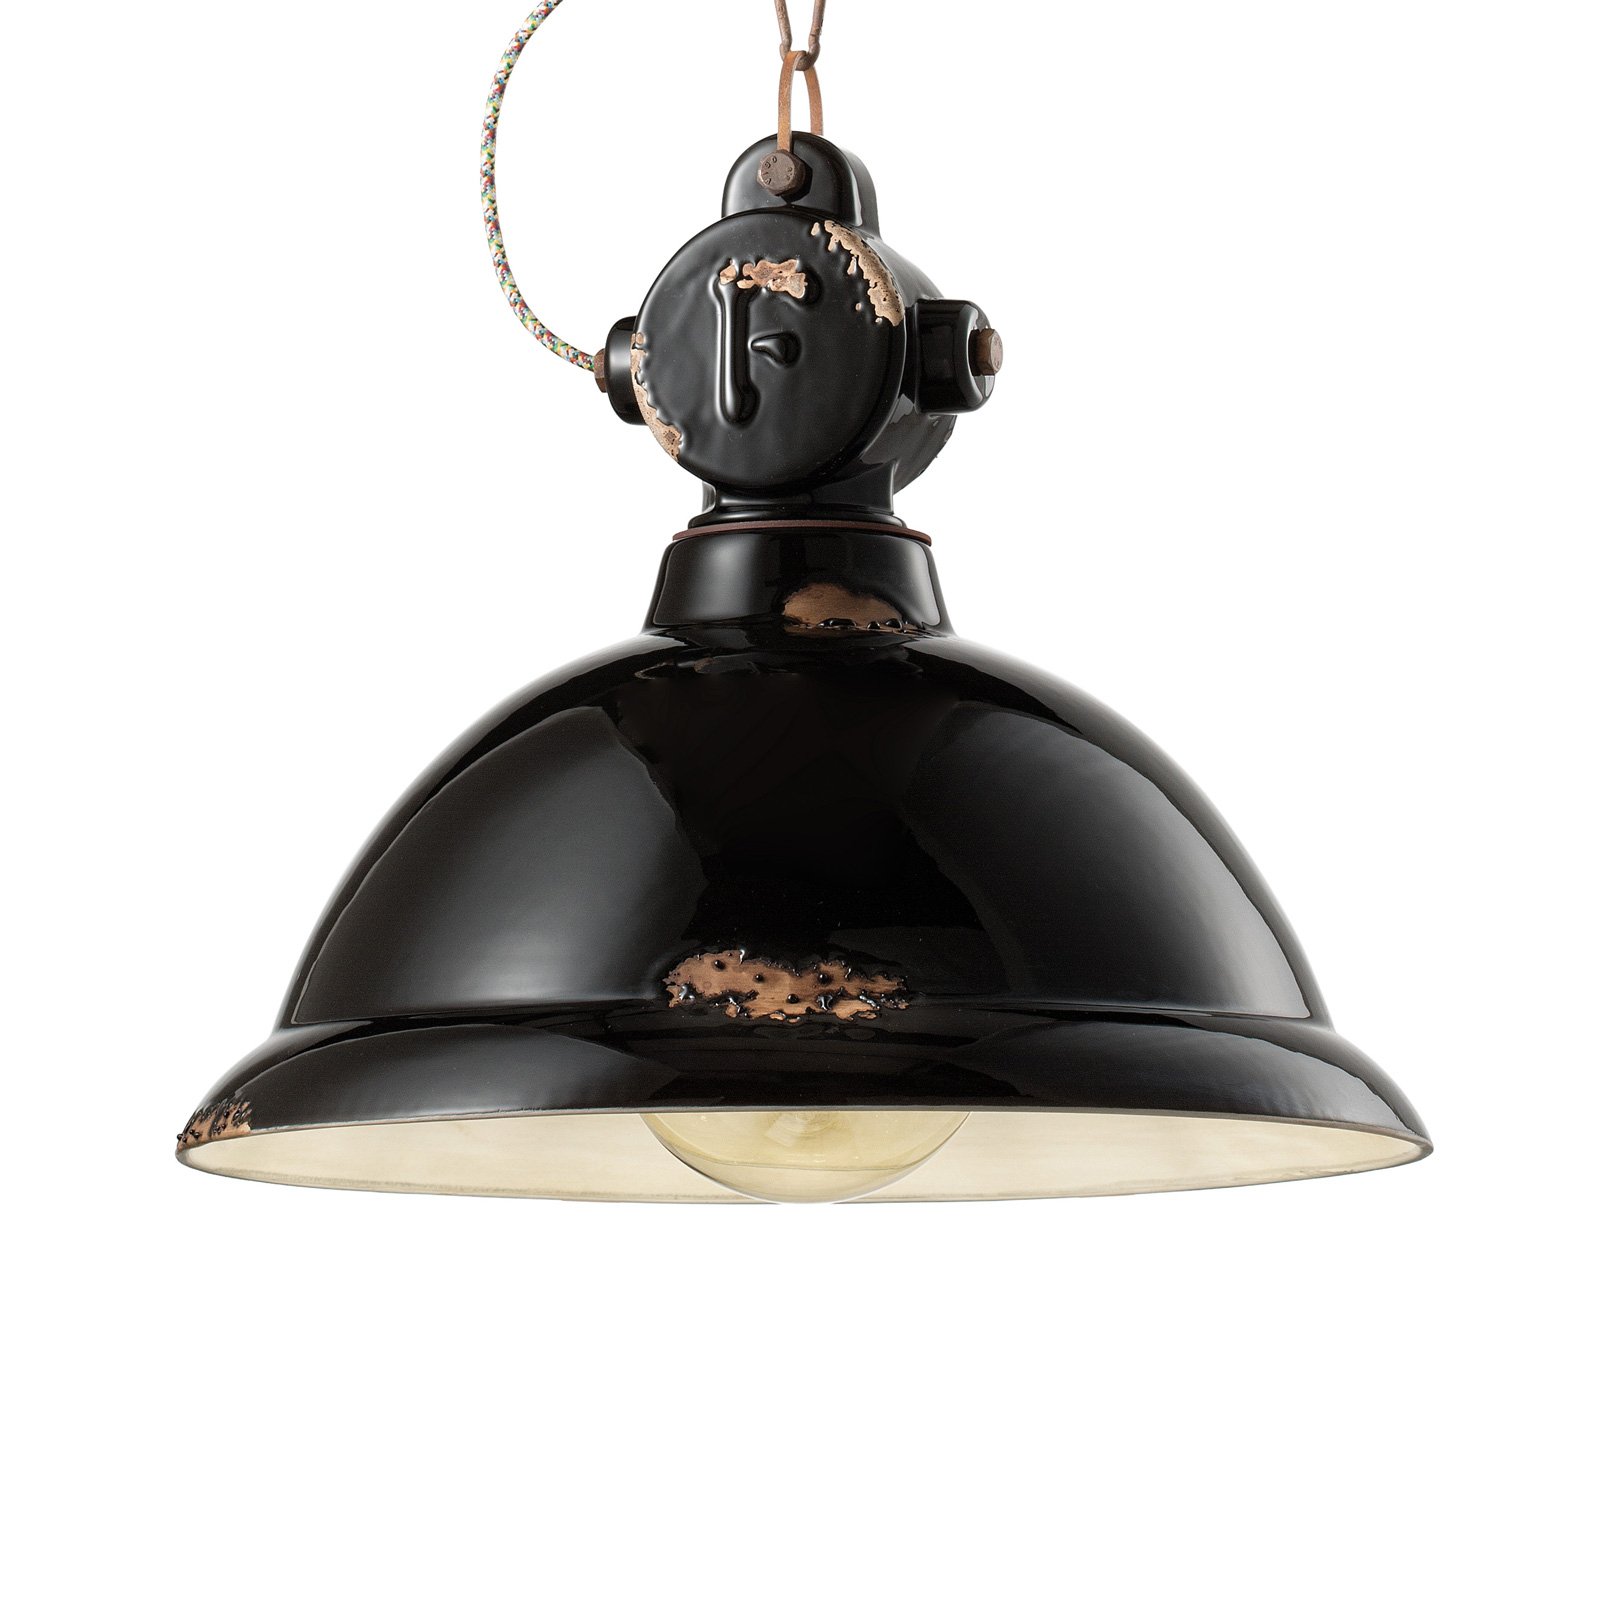 C1710 viseća lampa od keramike, crna